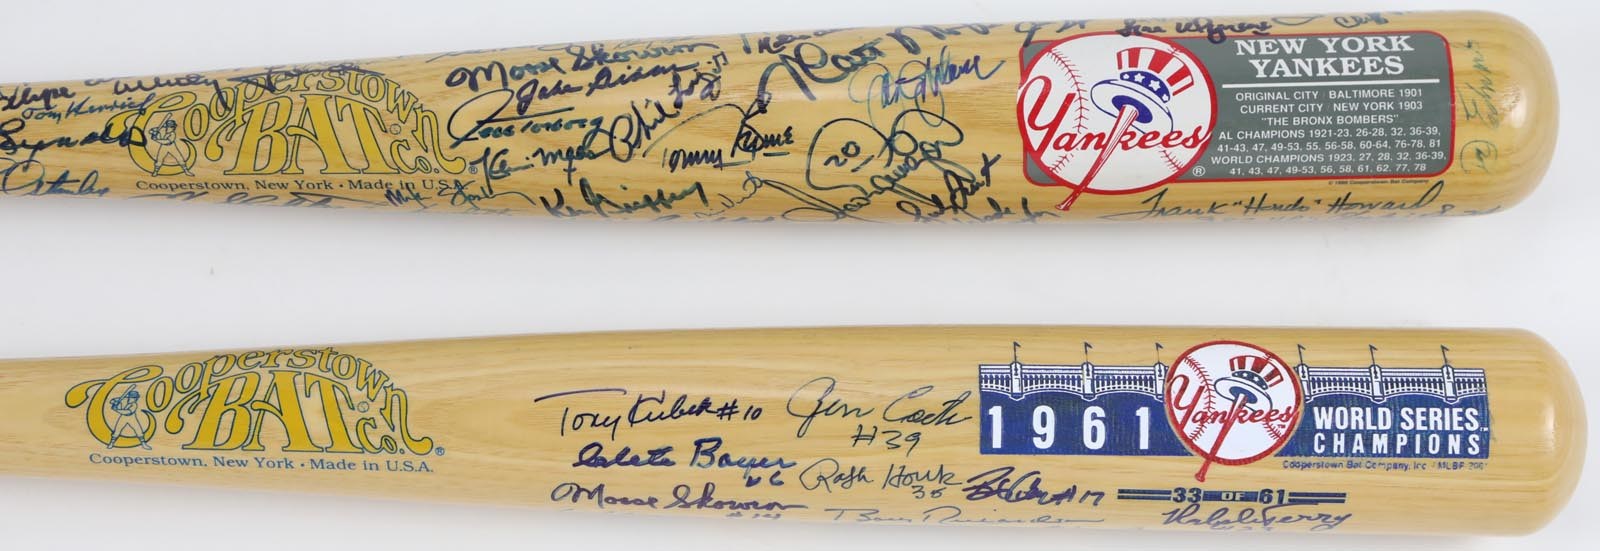 Baseball Autographs - New York Yankees Commemorative Signed Bats (2)